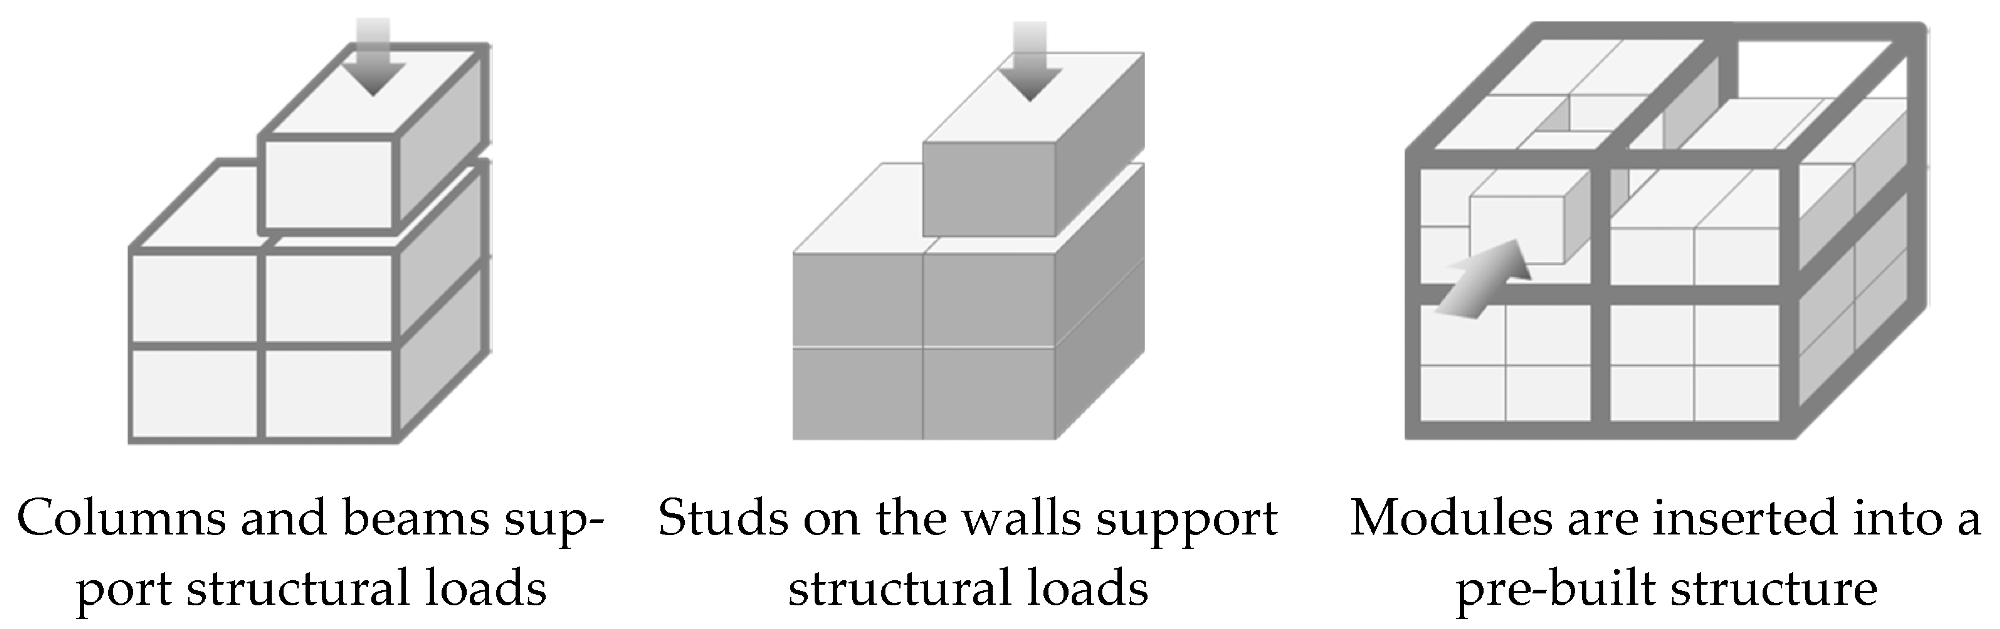 Modular construction methods